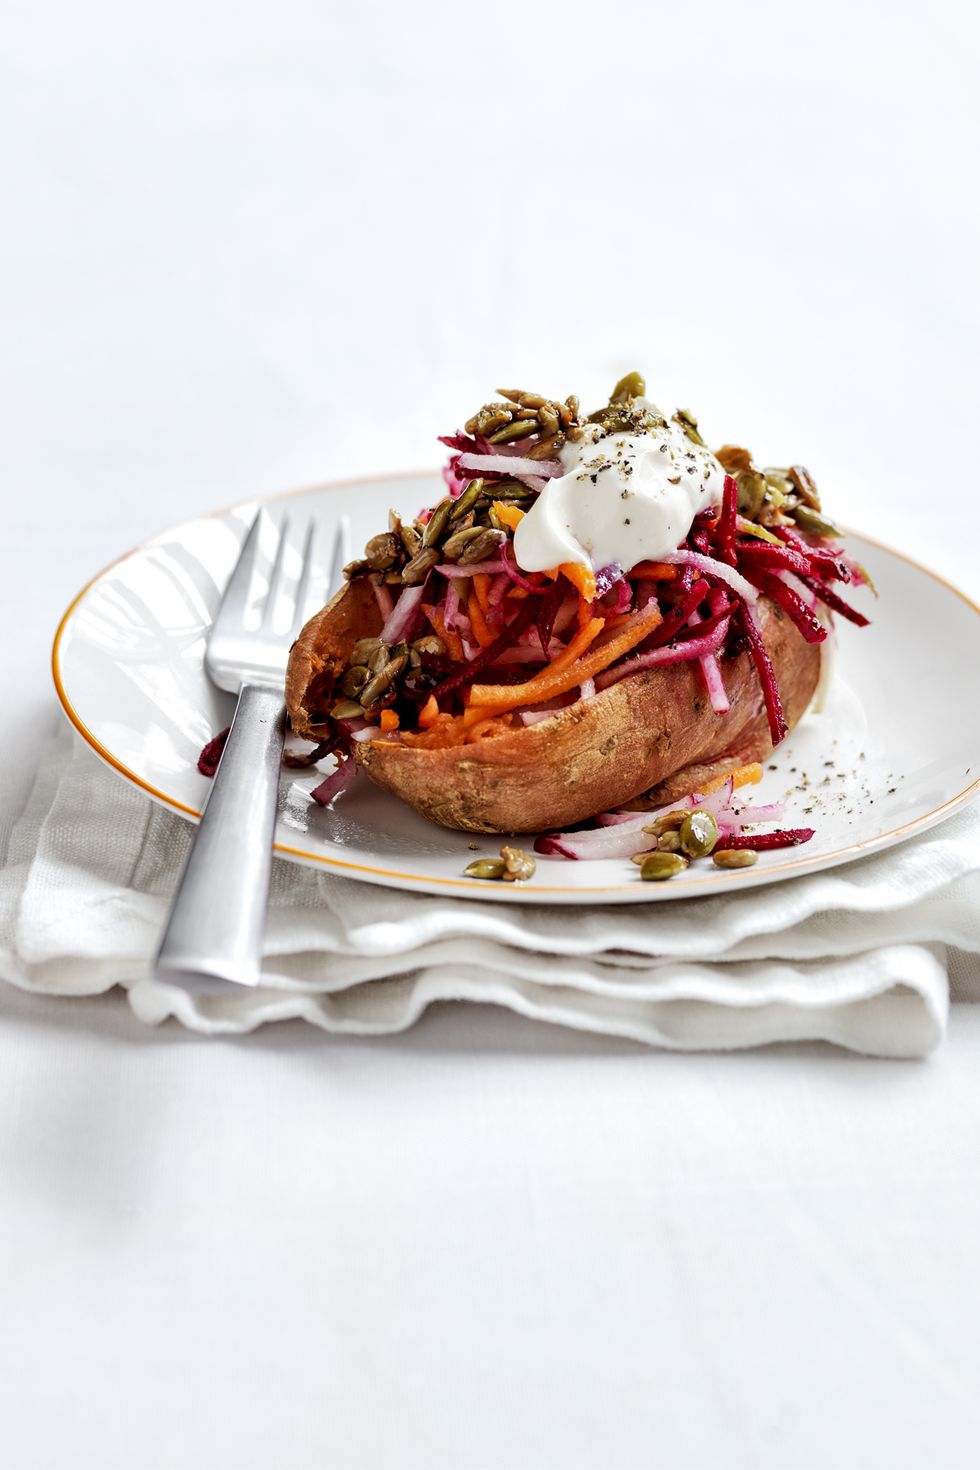 vegan thanksgiving recipes sweet potatoes with shredded salad